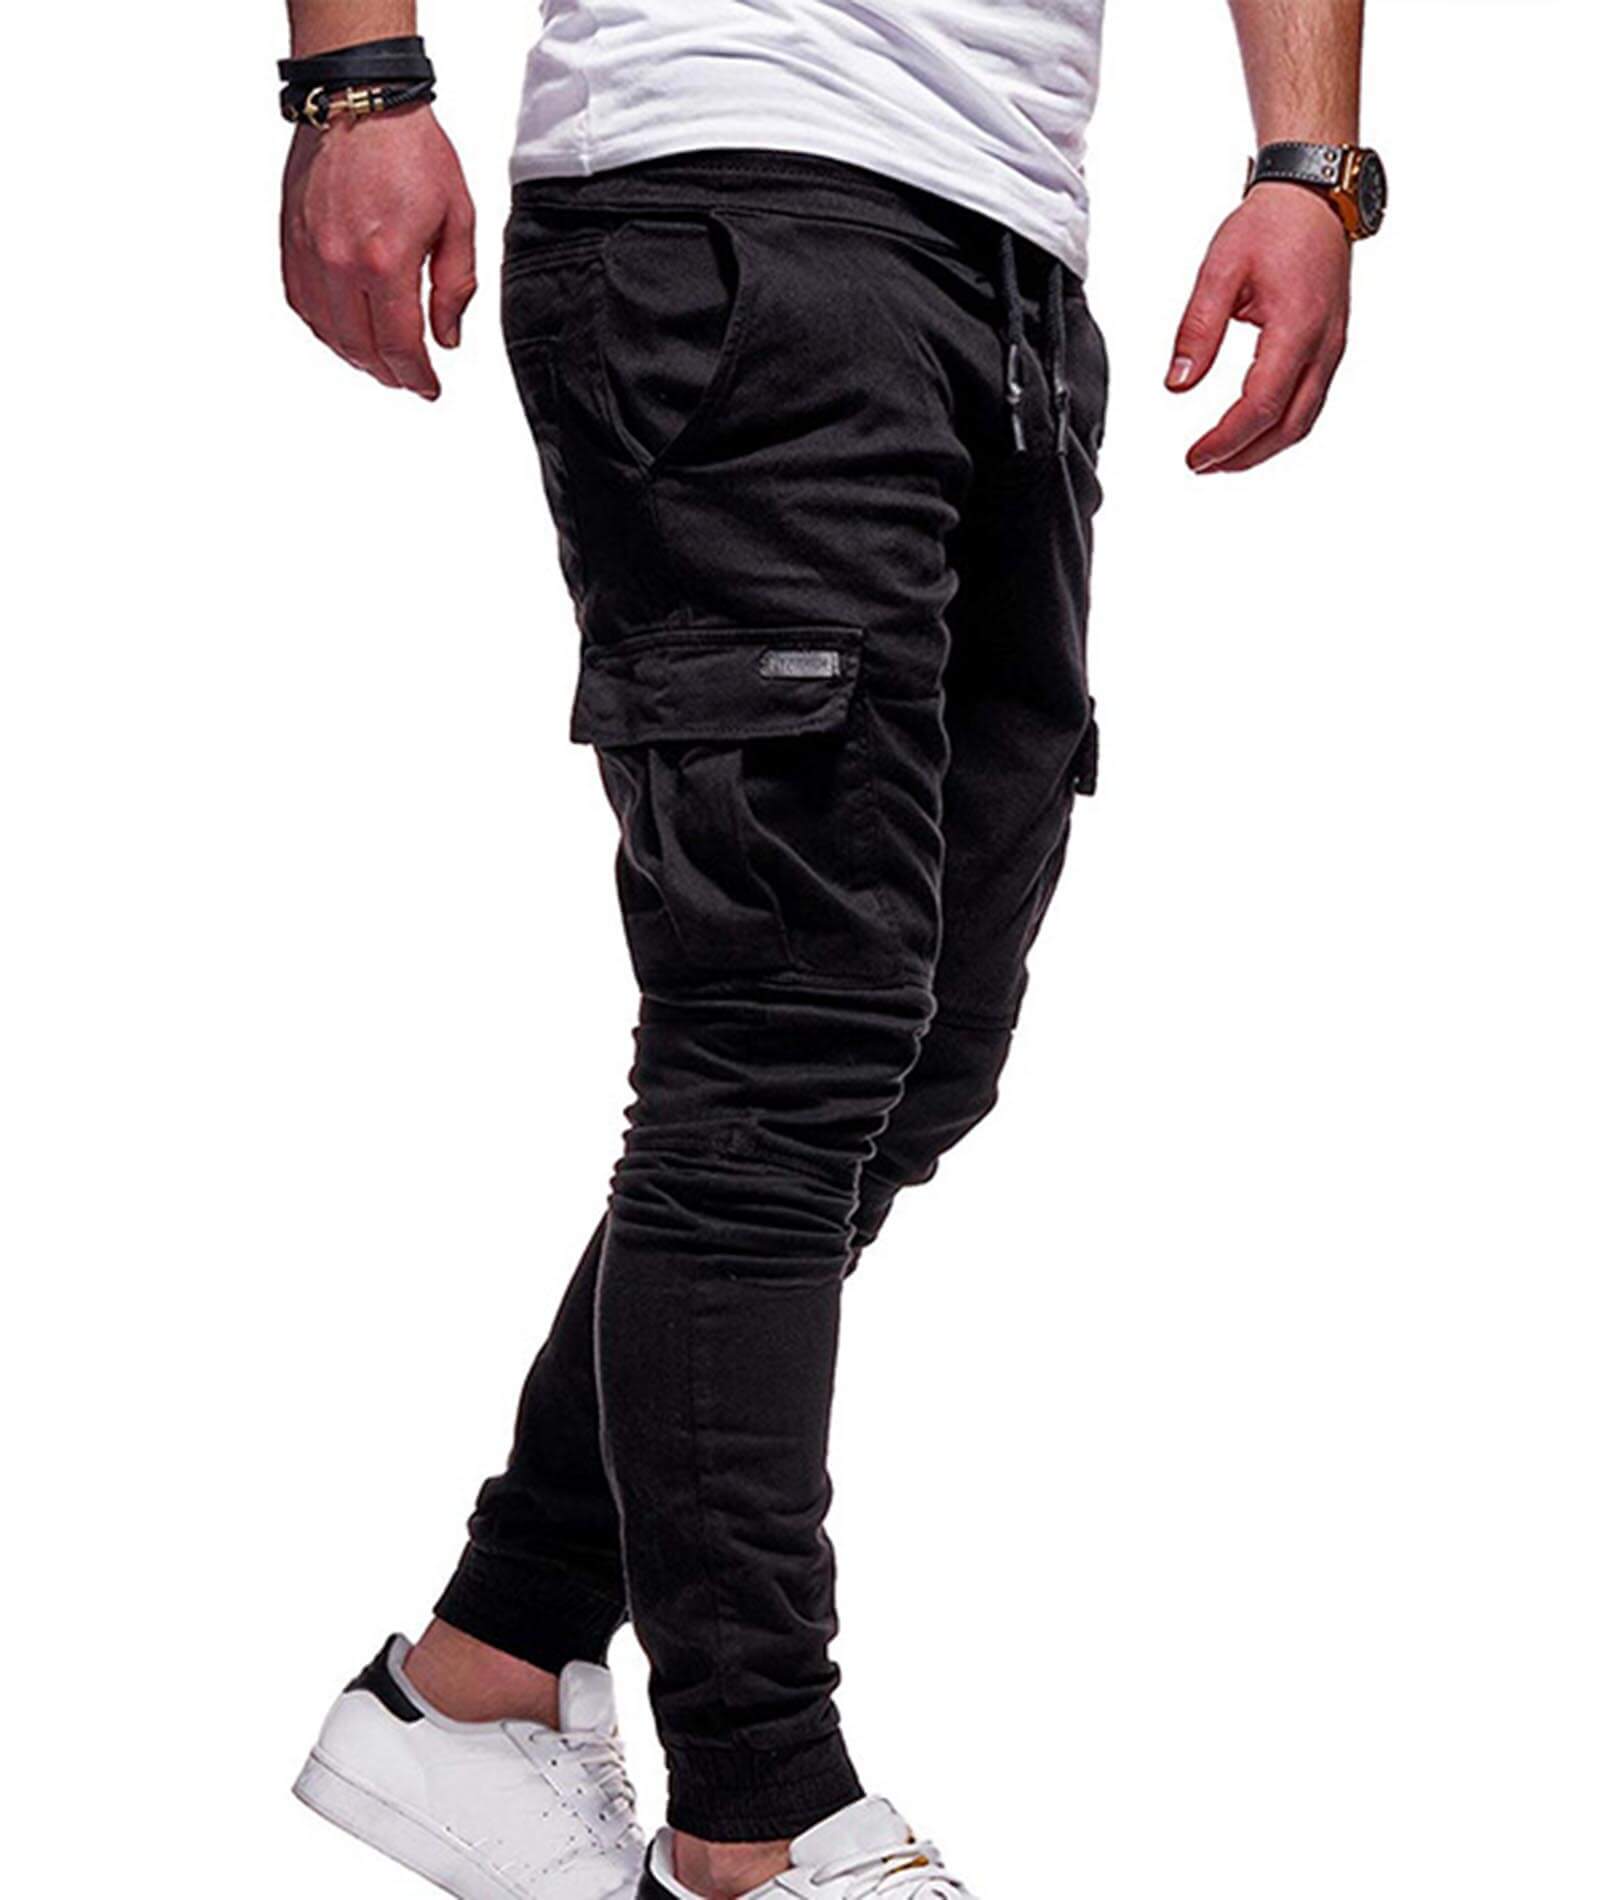  Men's 3XXL Regular Cozy Elastic Waist Jogger Gym Sweatpants Cotton Activewear Sports Drawstring Cargo Pants